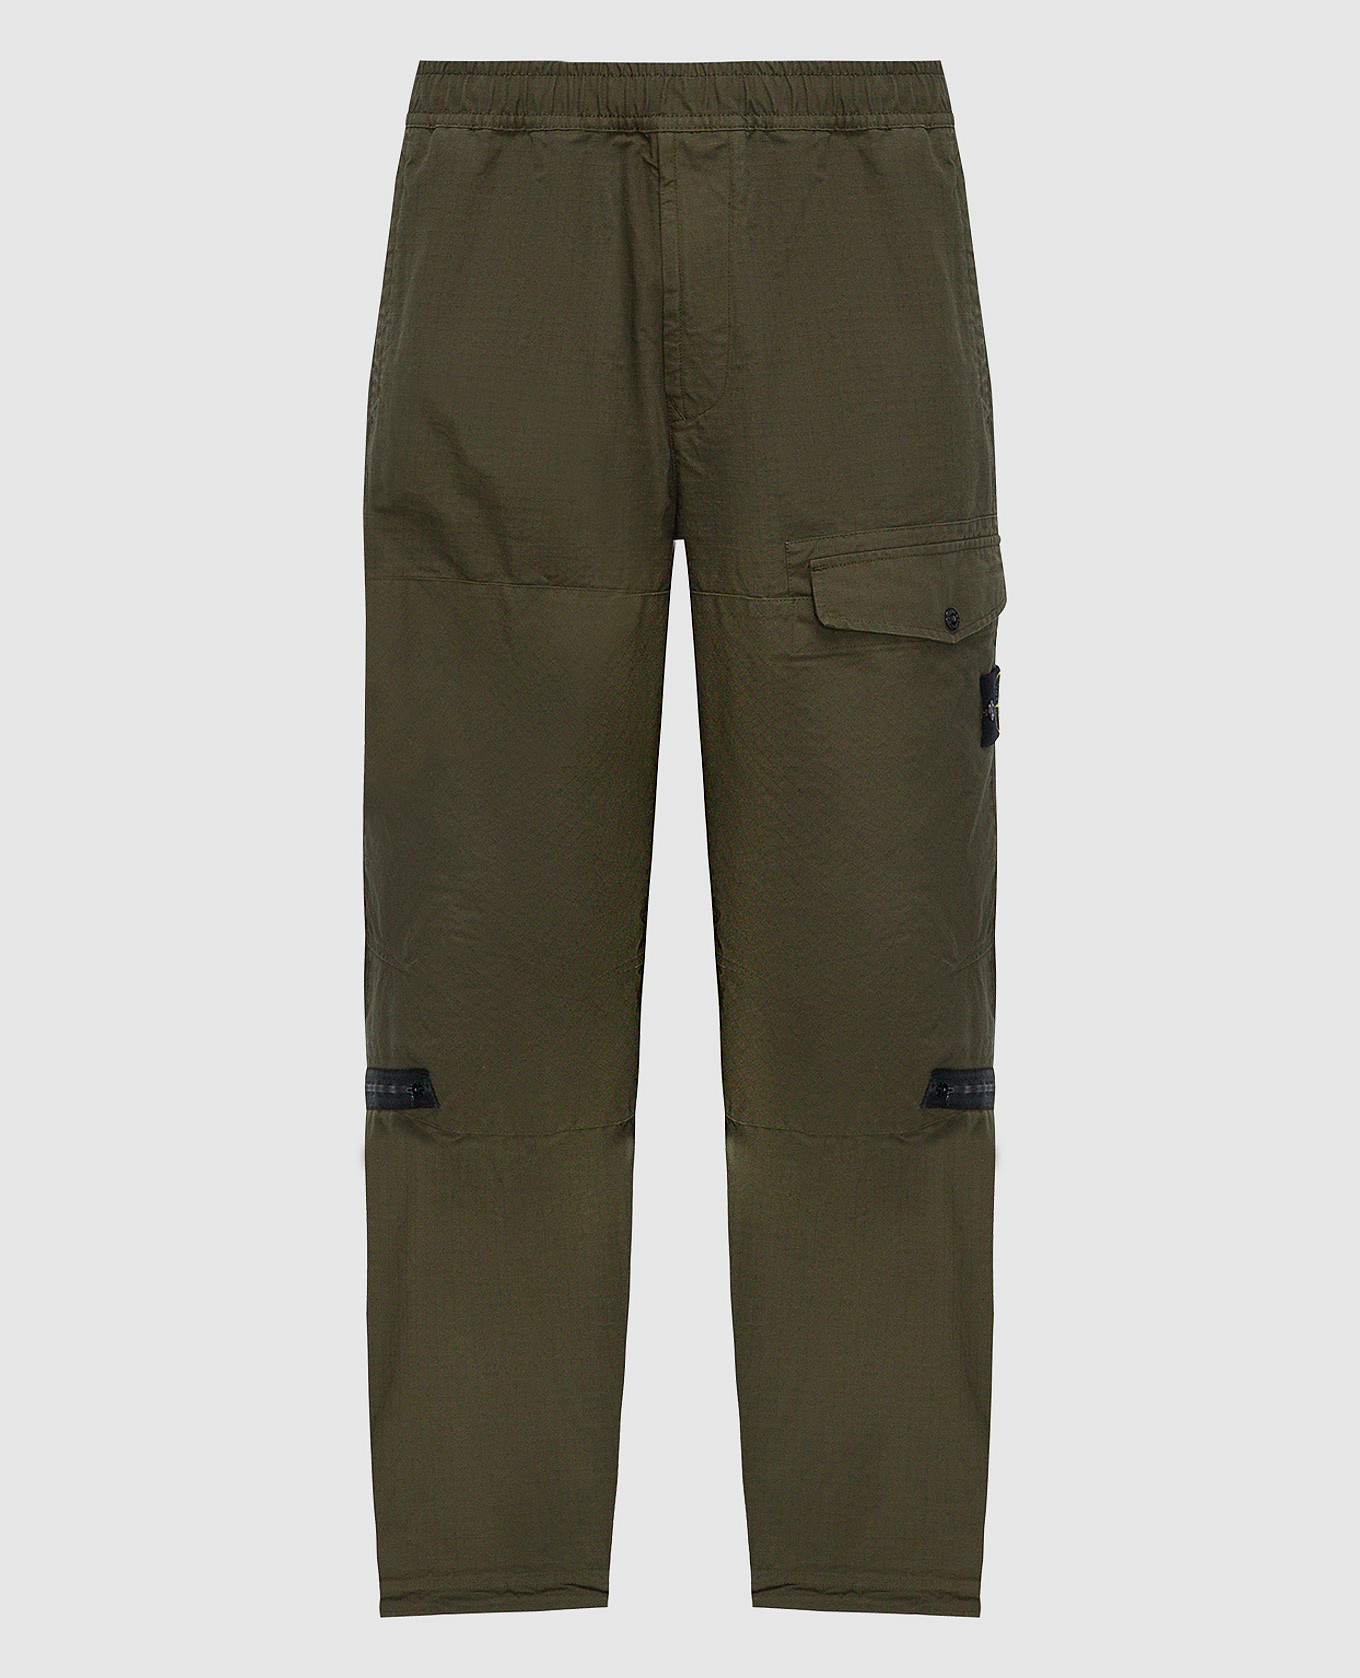 Khaki logo cargo pants